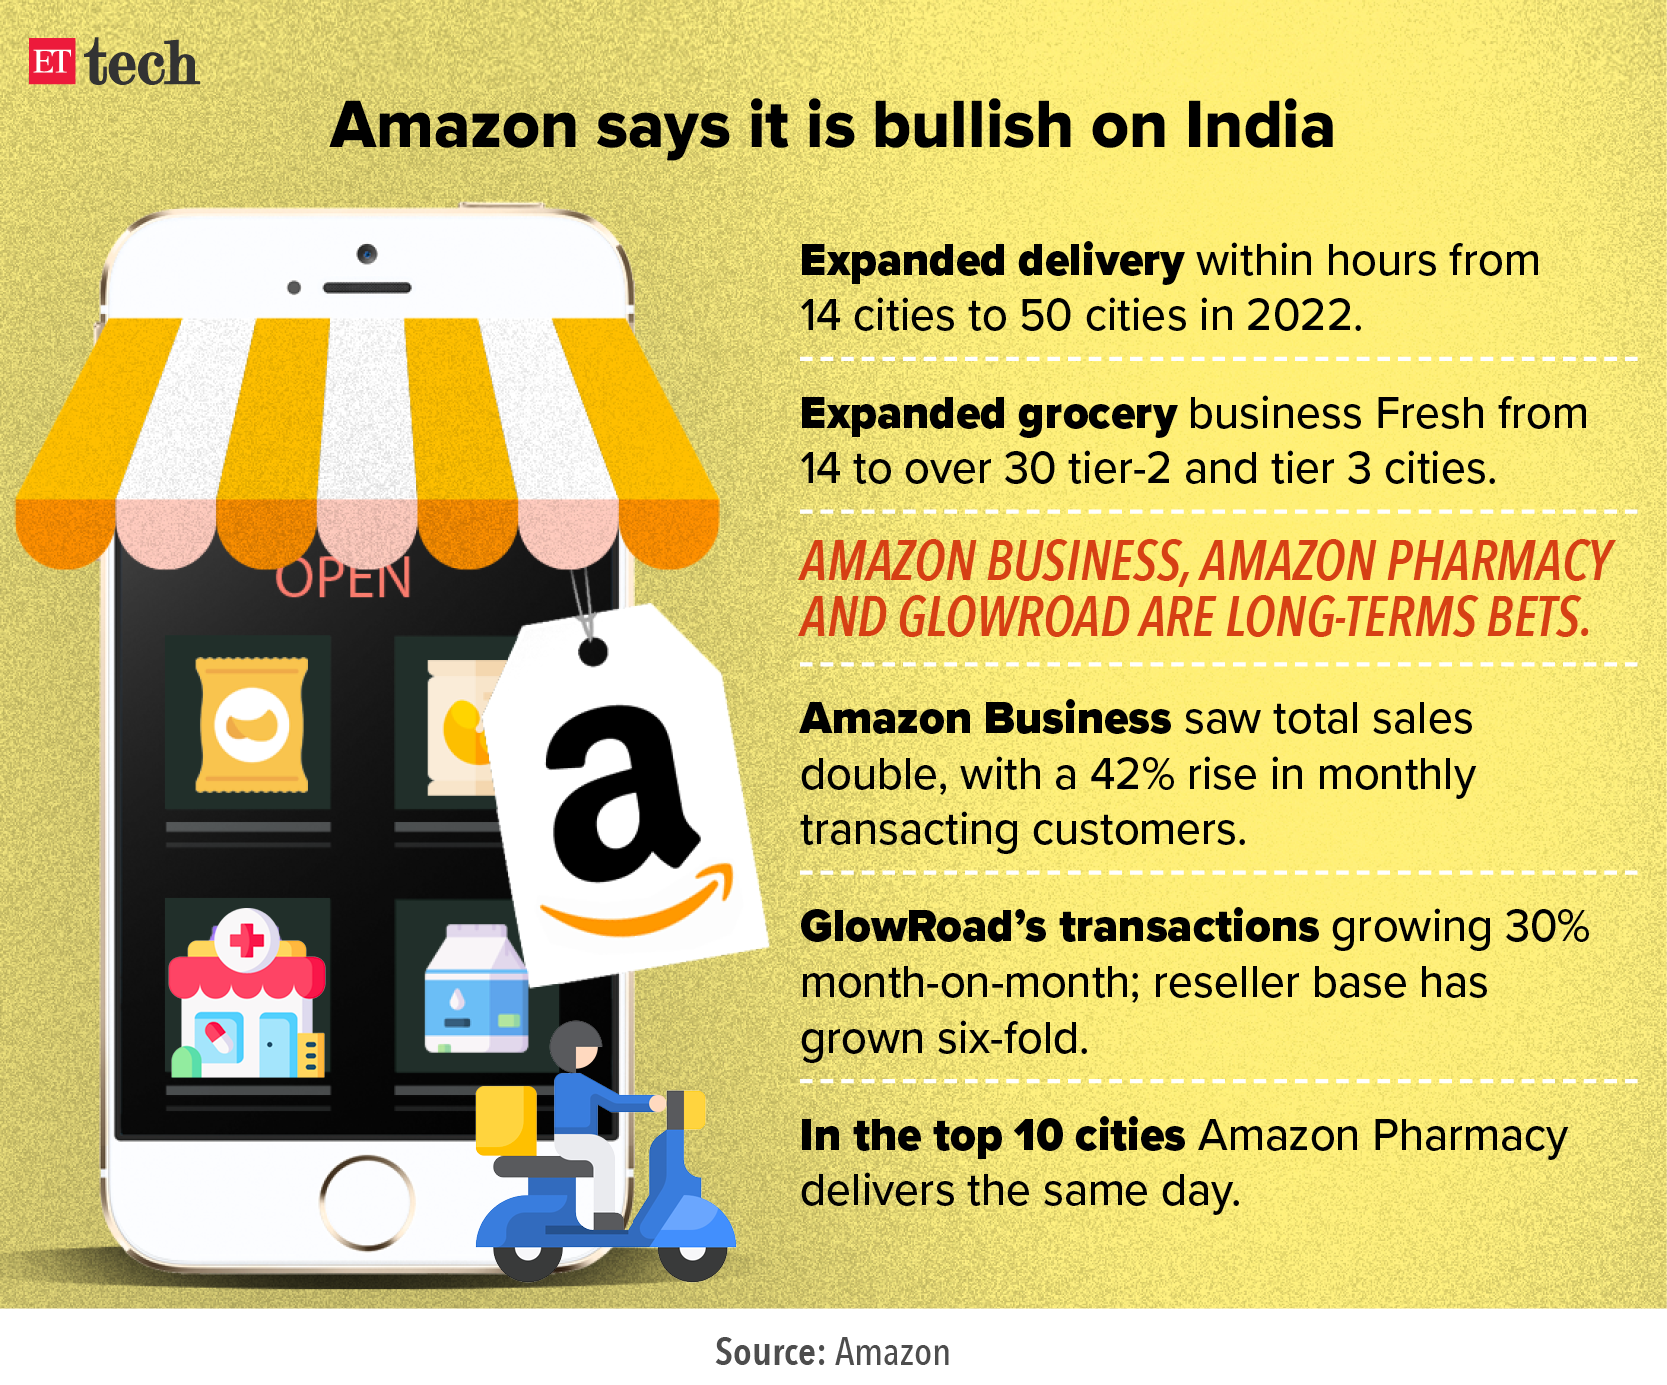 Amazon bullish on India